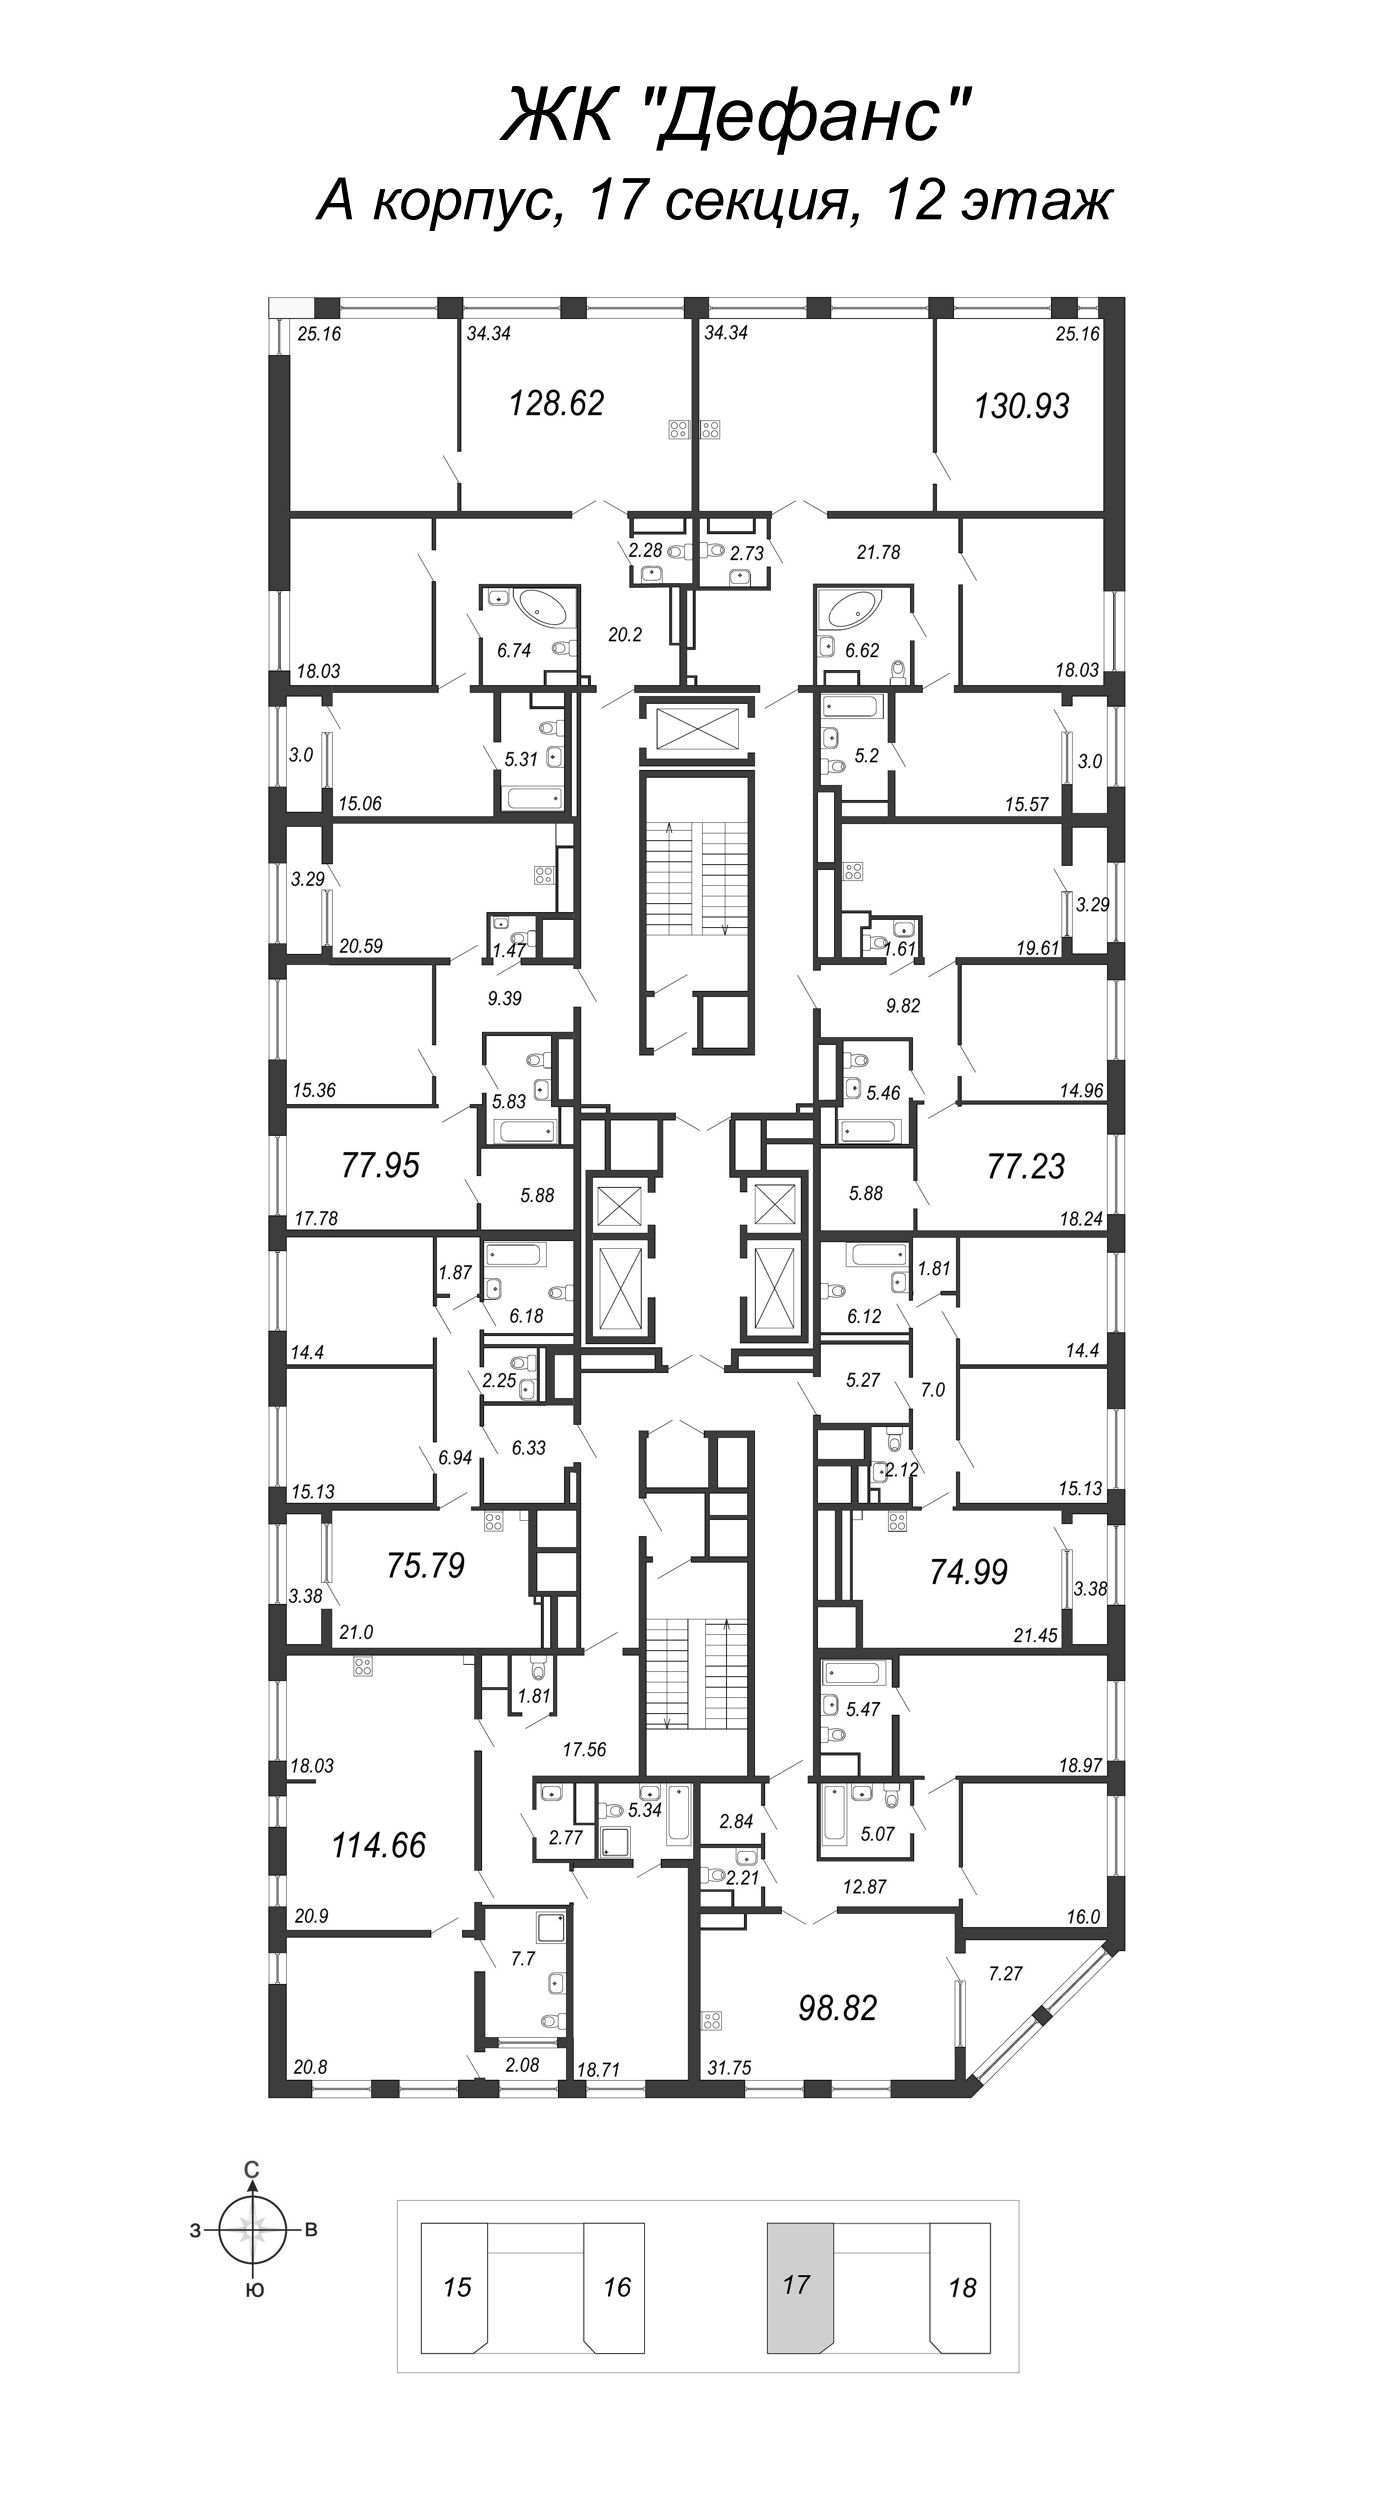 3-комнатная (Евро) квартира, 74.99 м² - планировка этажа